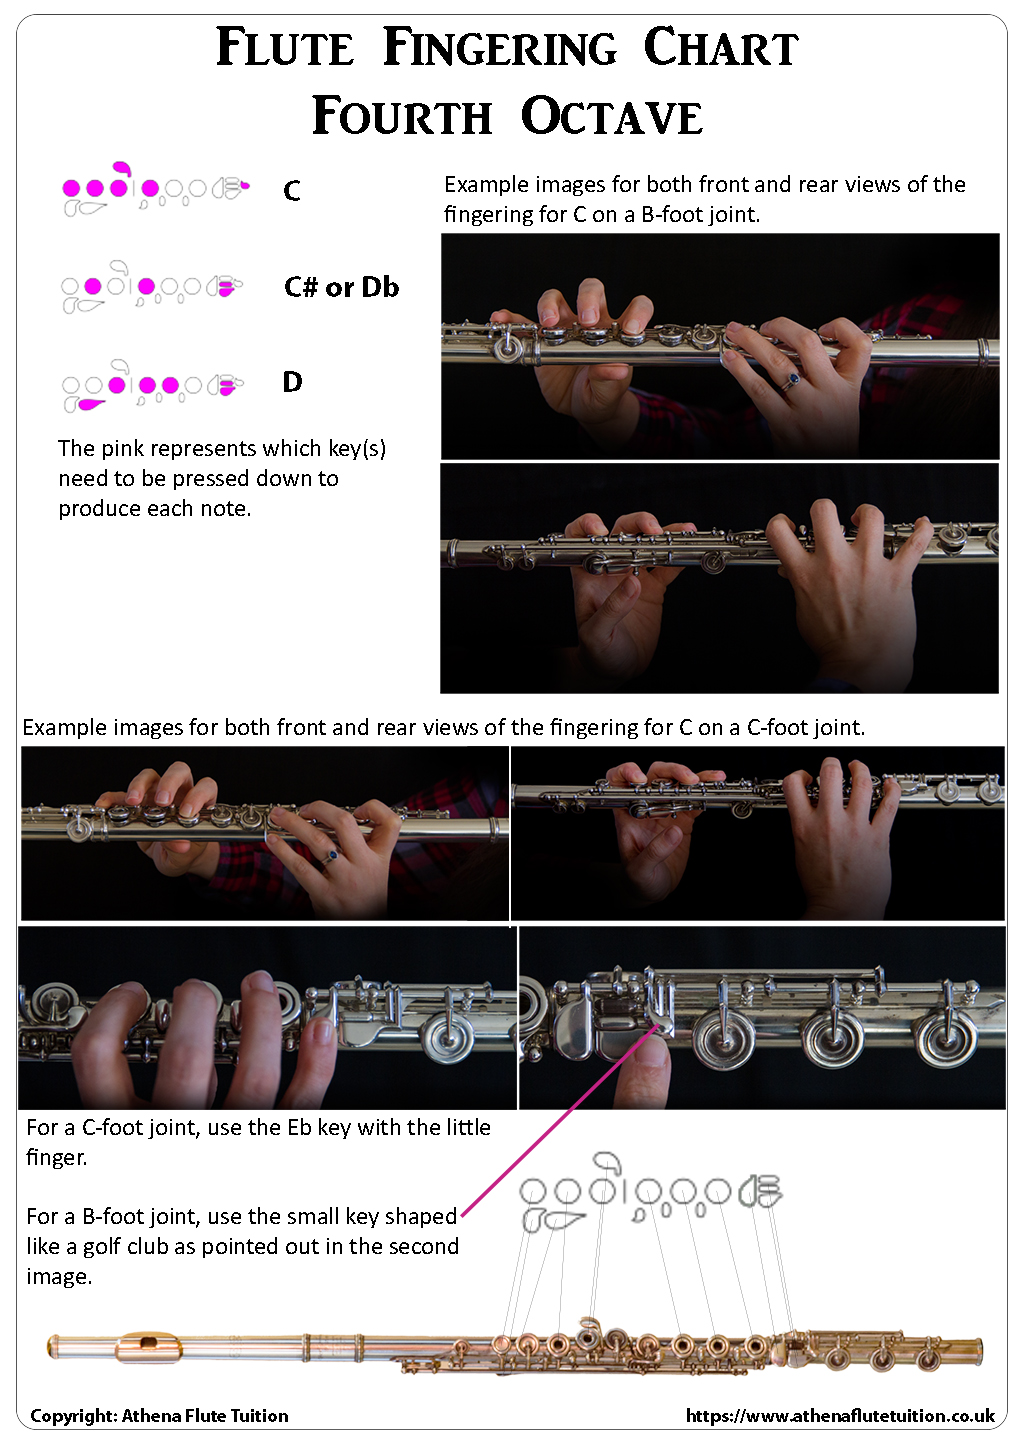 athena-flute-tuition-tutorials-flute-fingering-charts